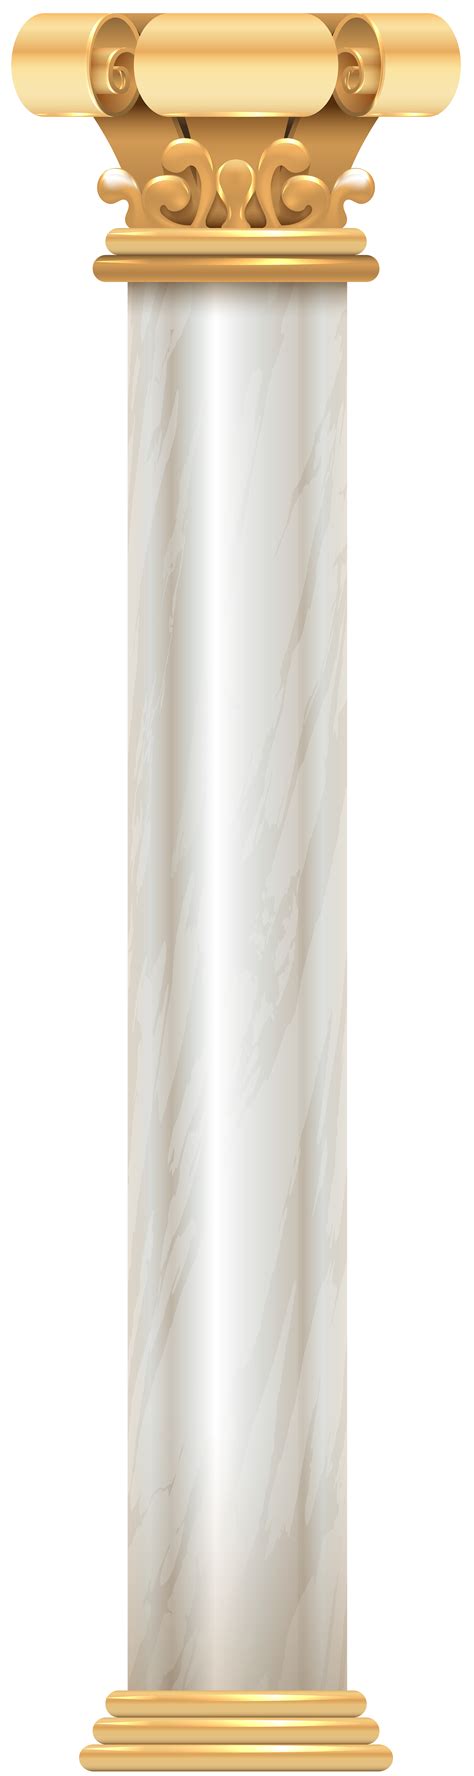 Column Clipart